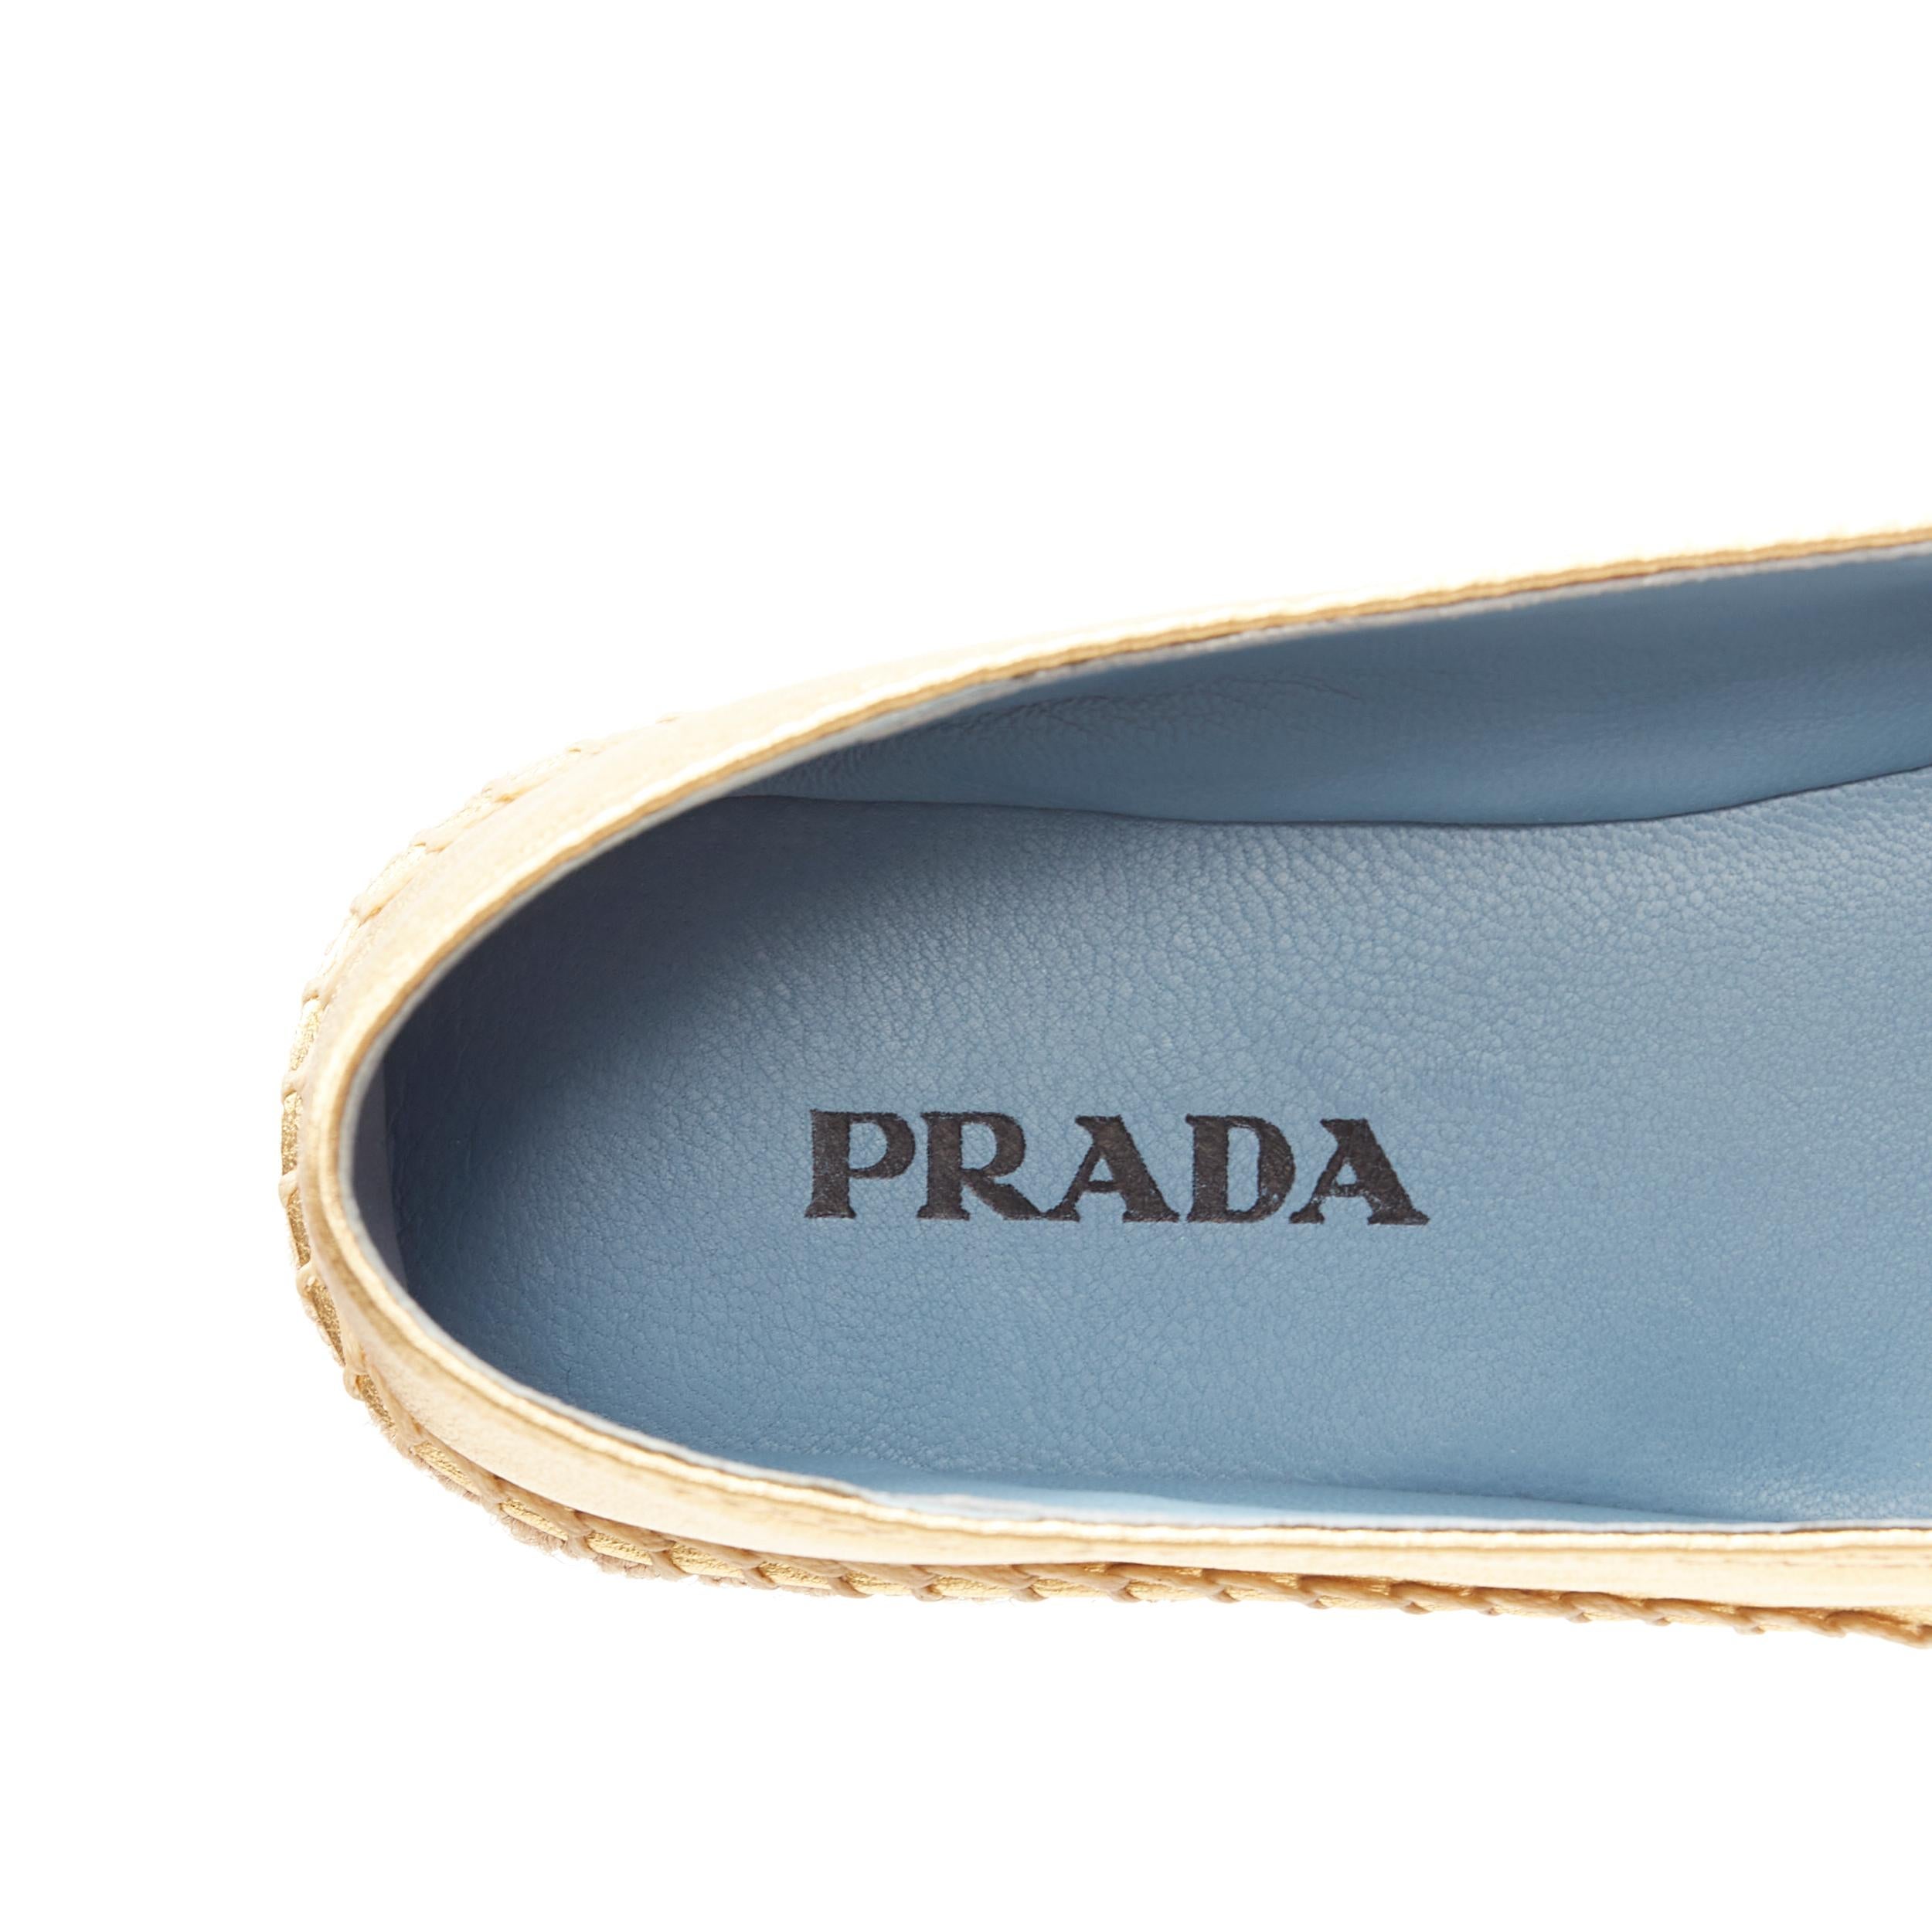 new PRADA gold leather logo peep toe jute platform espadrille shoe EU38.5 2